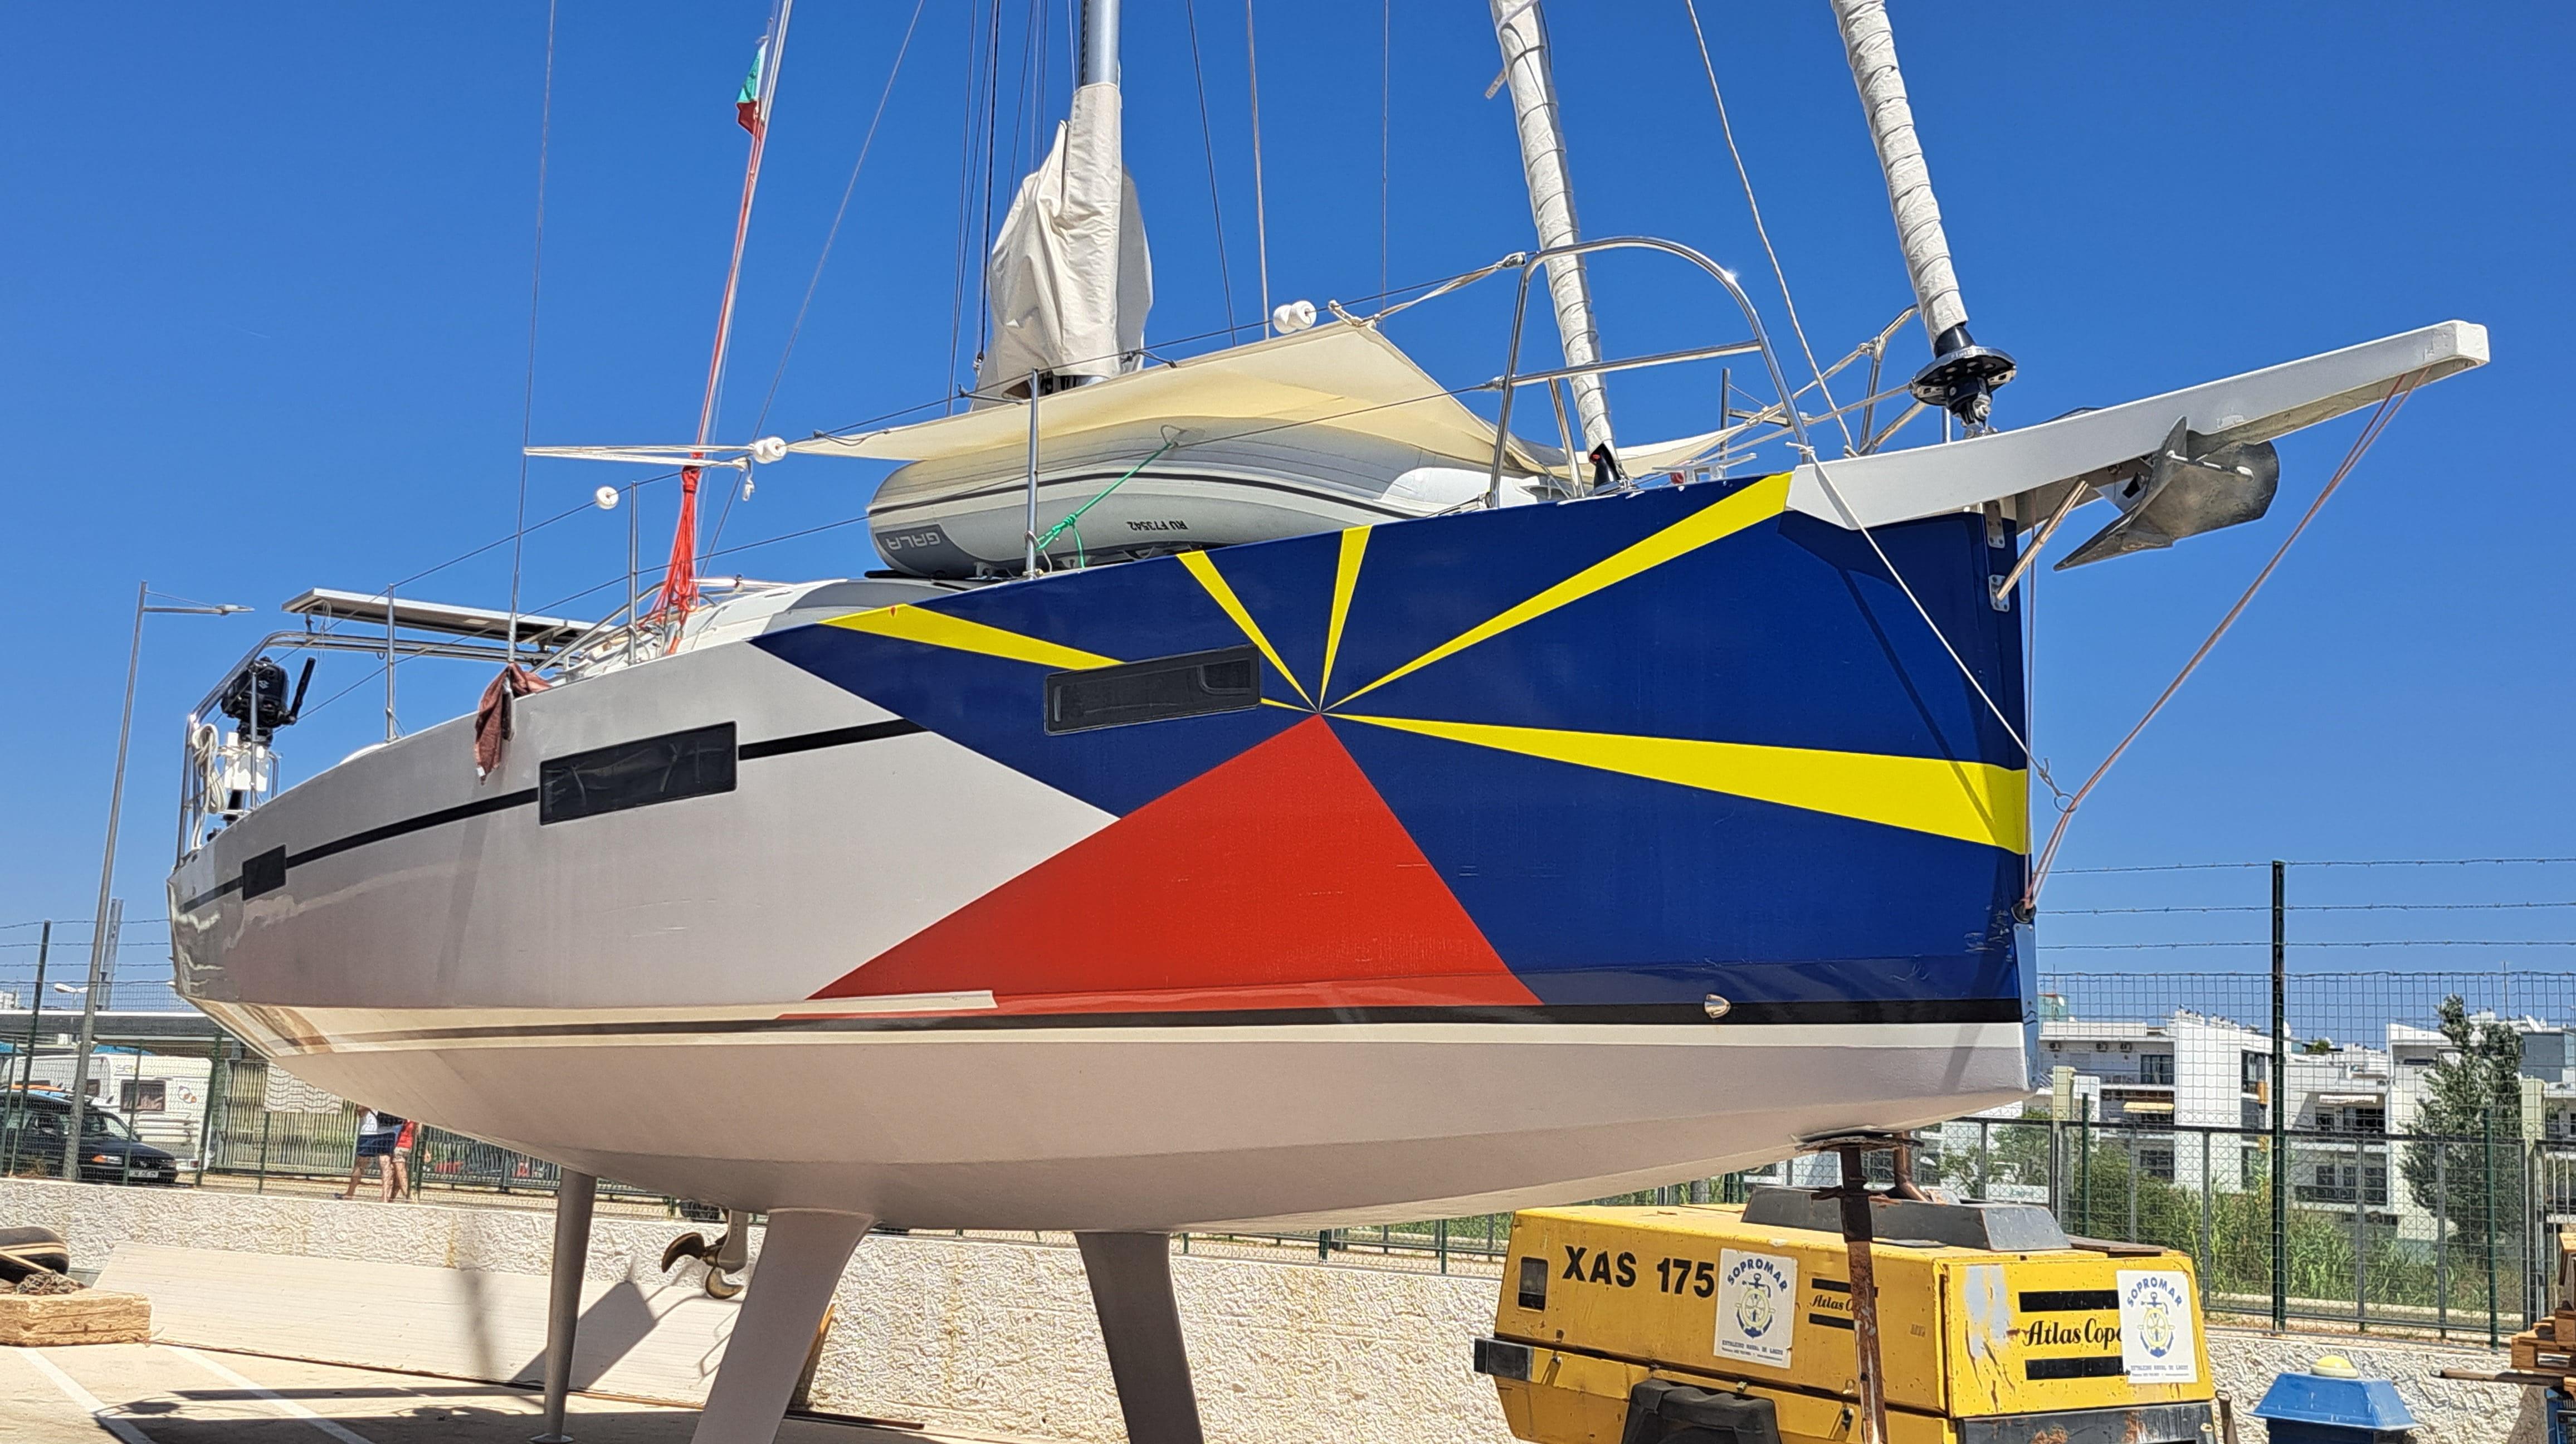 rm 1070 yacht for sale